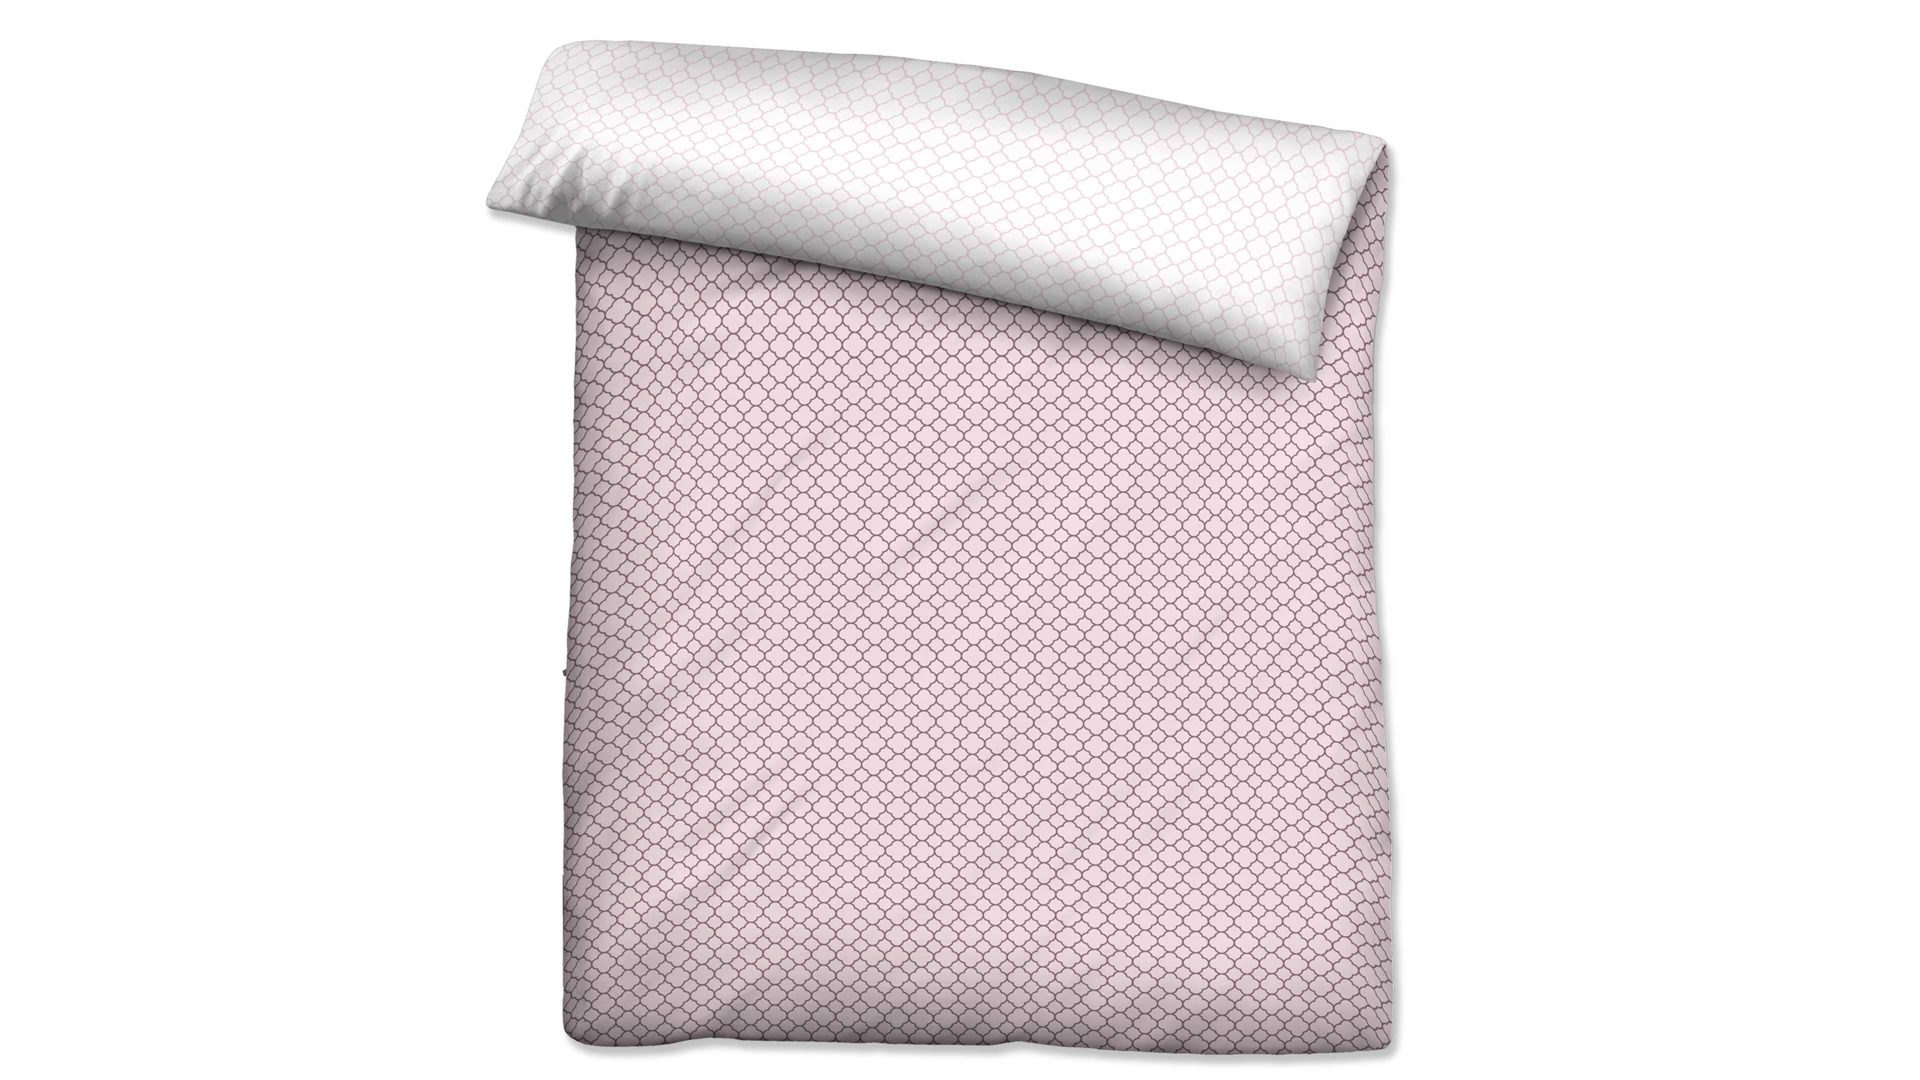 Bettbezug Biberna aus Stoff in Pastellfarben biberna Mako-Satin Bettdeckenbezug Grafik Mix & Match rosefarbenes & weißes Grafikmuster – ca. 200 x 200 cm